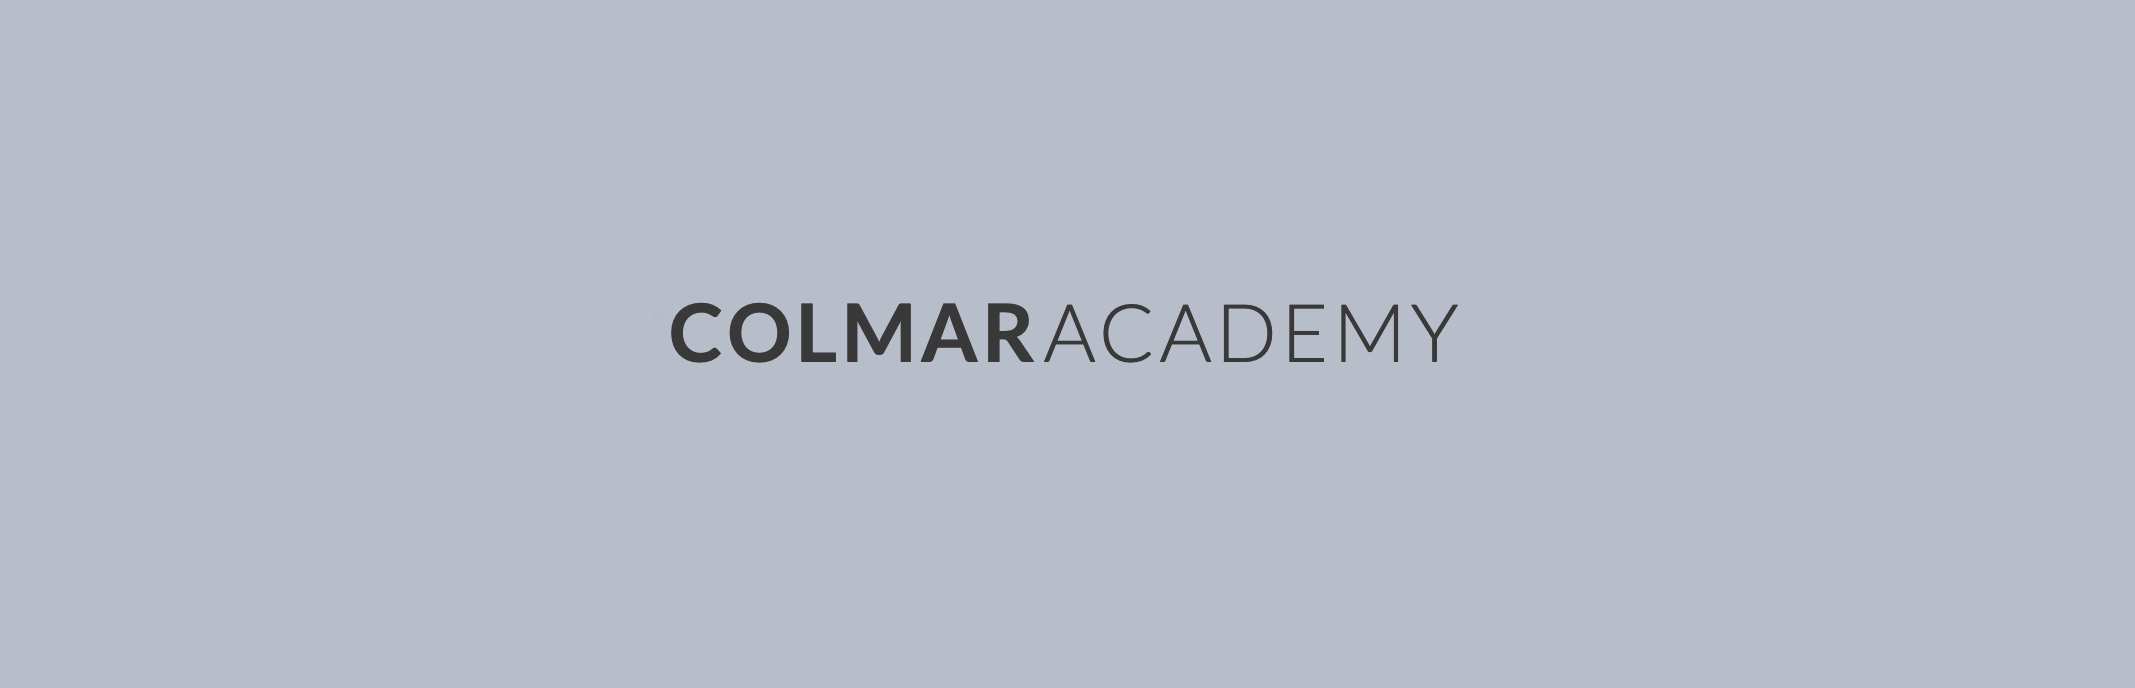 colmar academy title